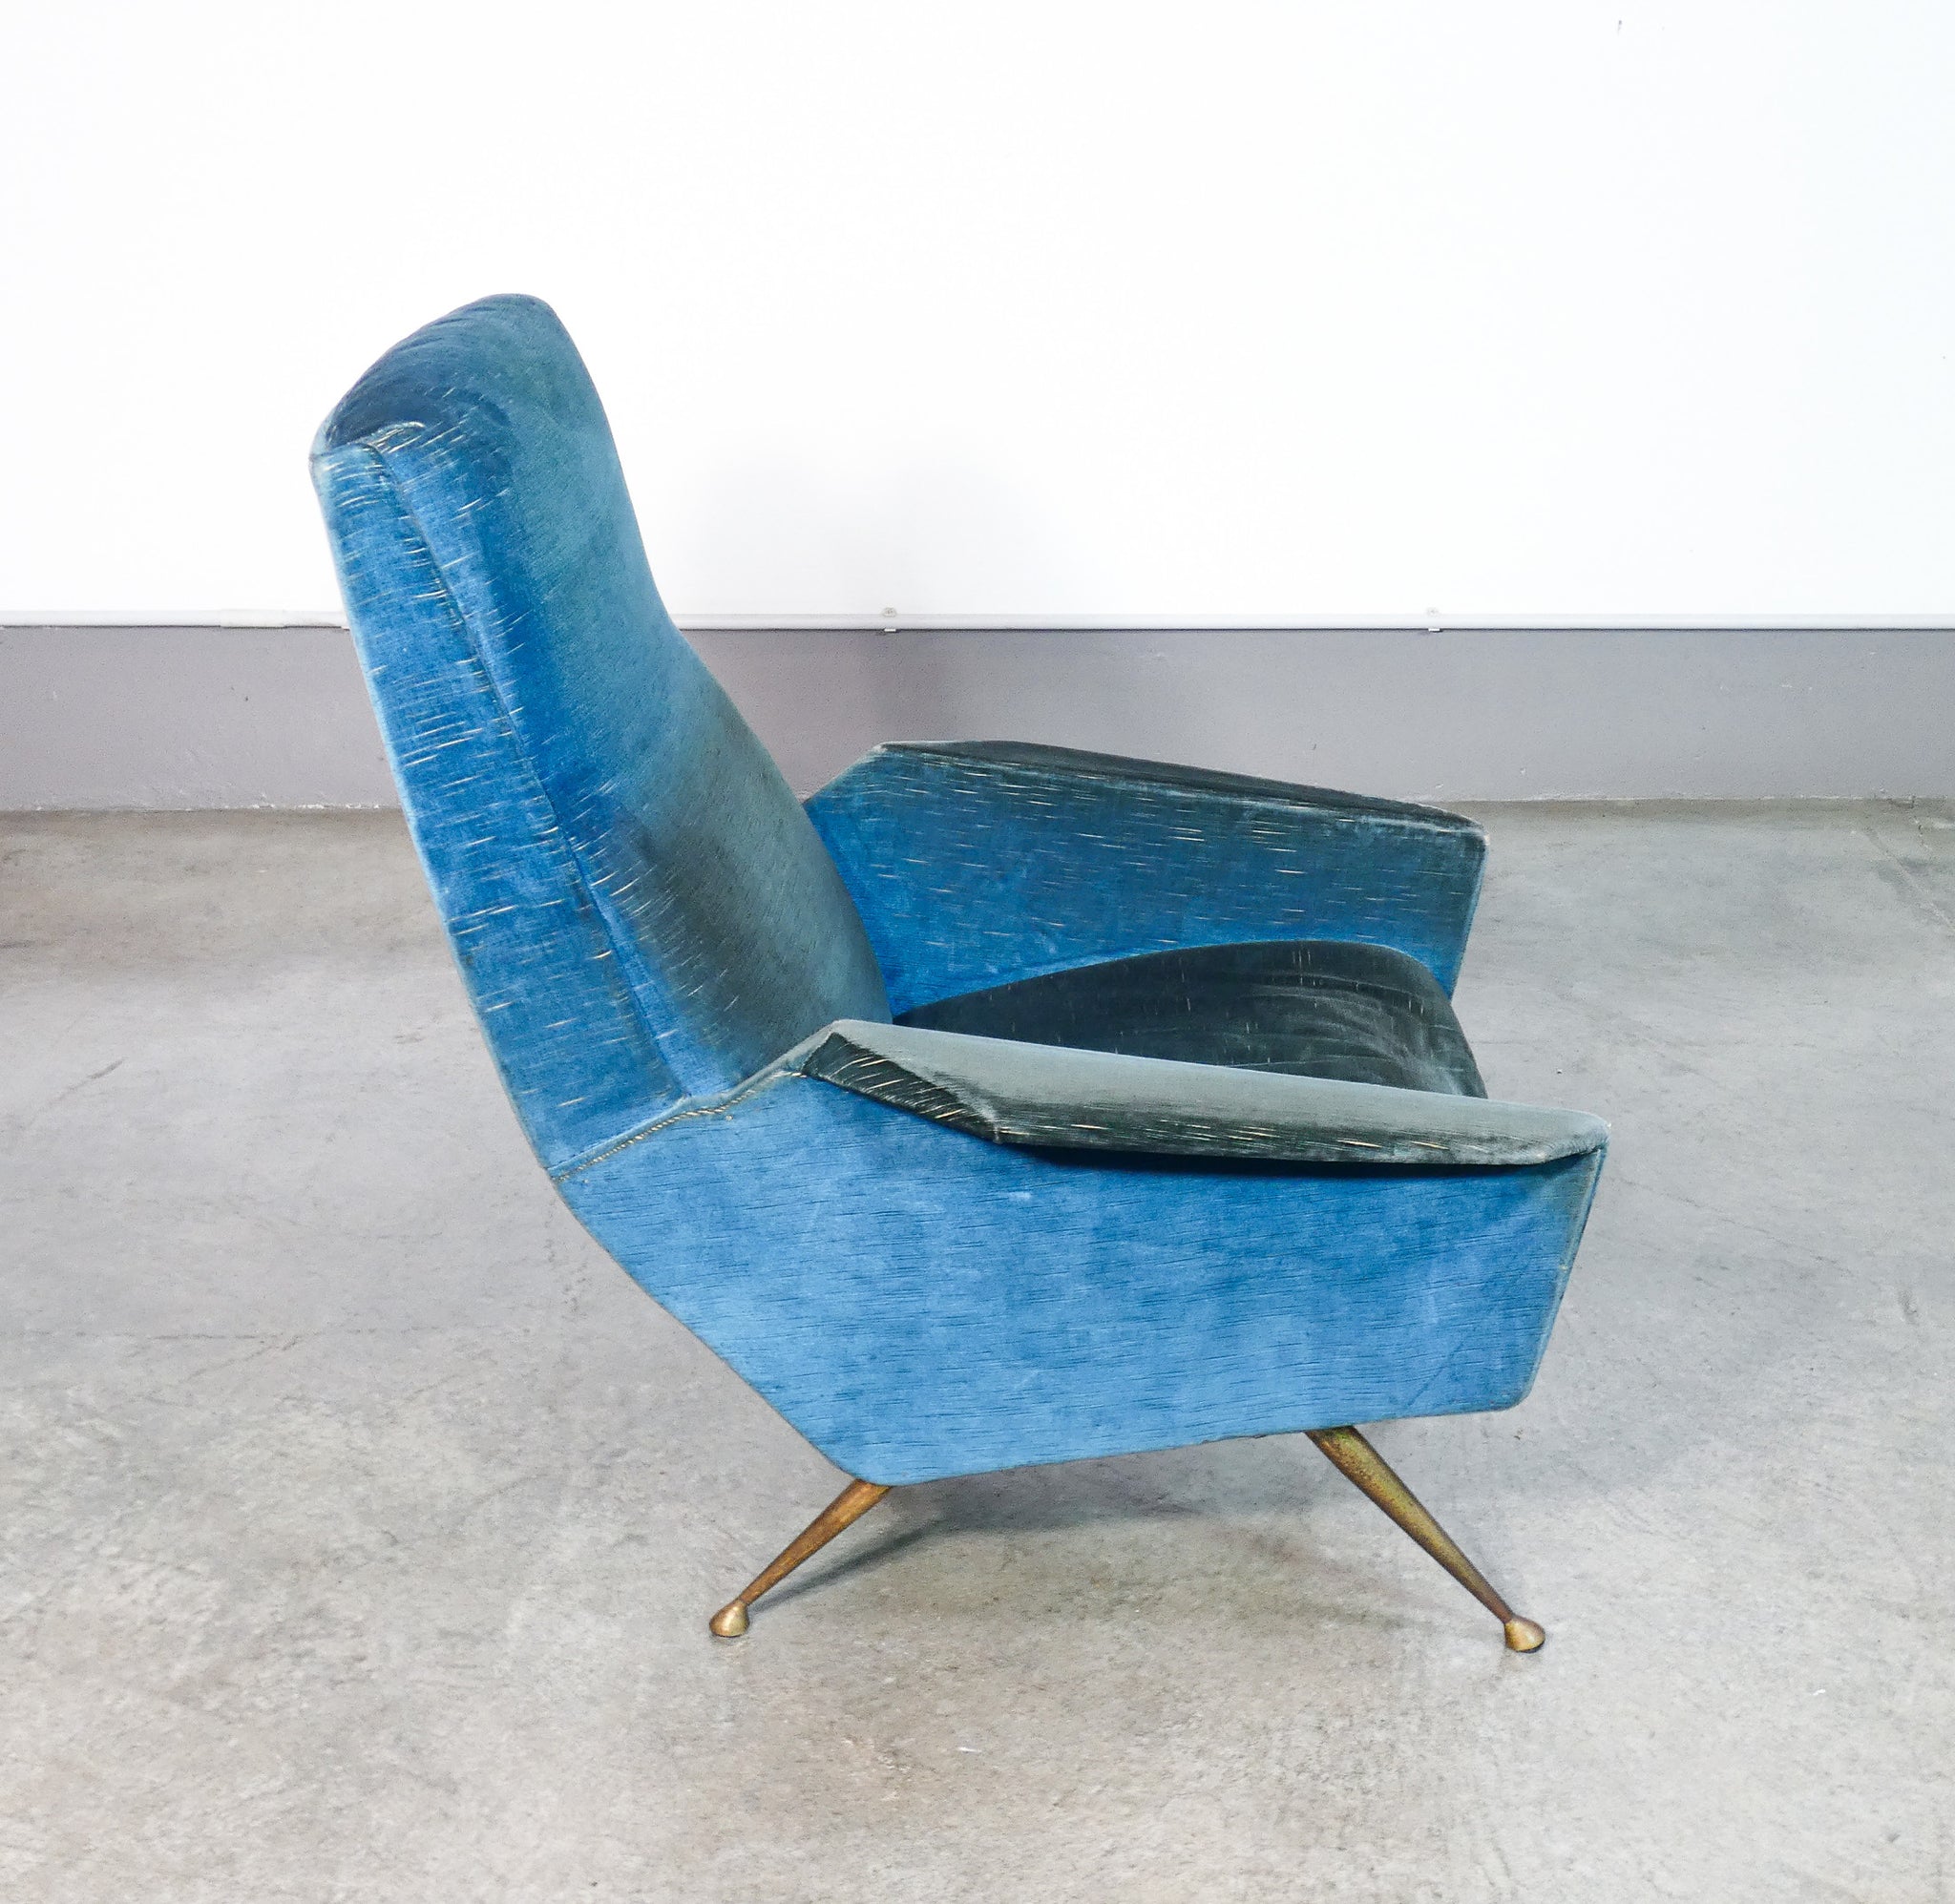 poltrona design italiano 1940s vintage armchair italy mid century sofa epoca